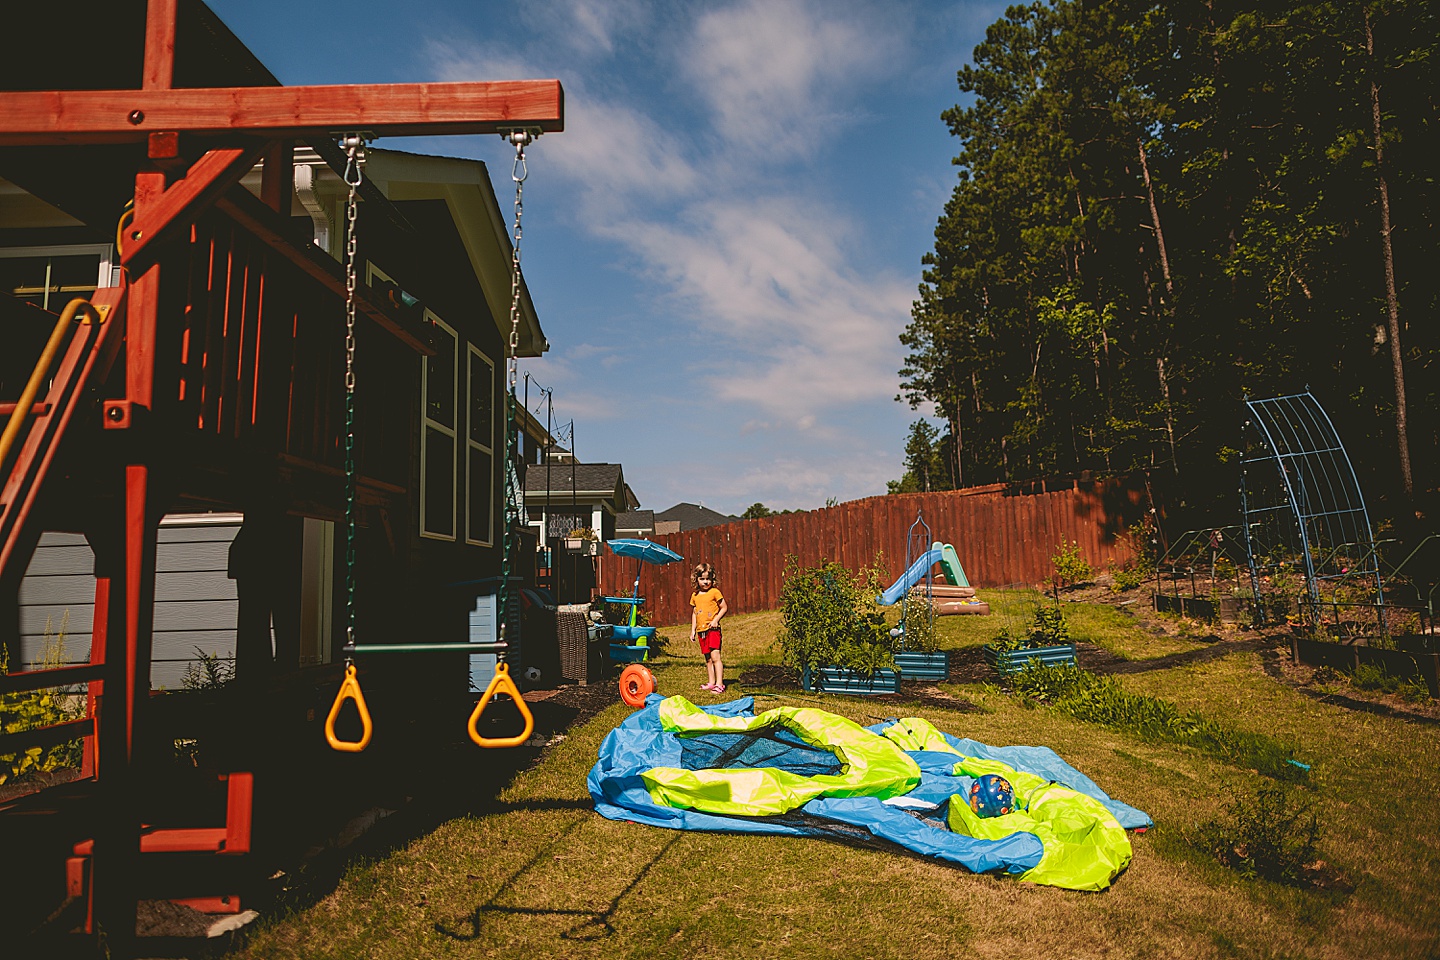 Boy jumping on deflated bounce house in backyard